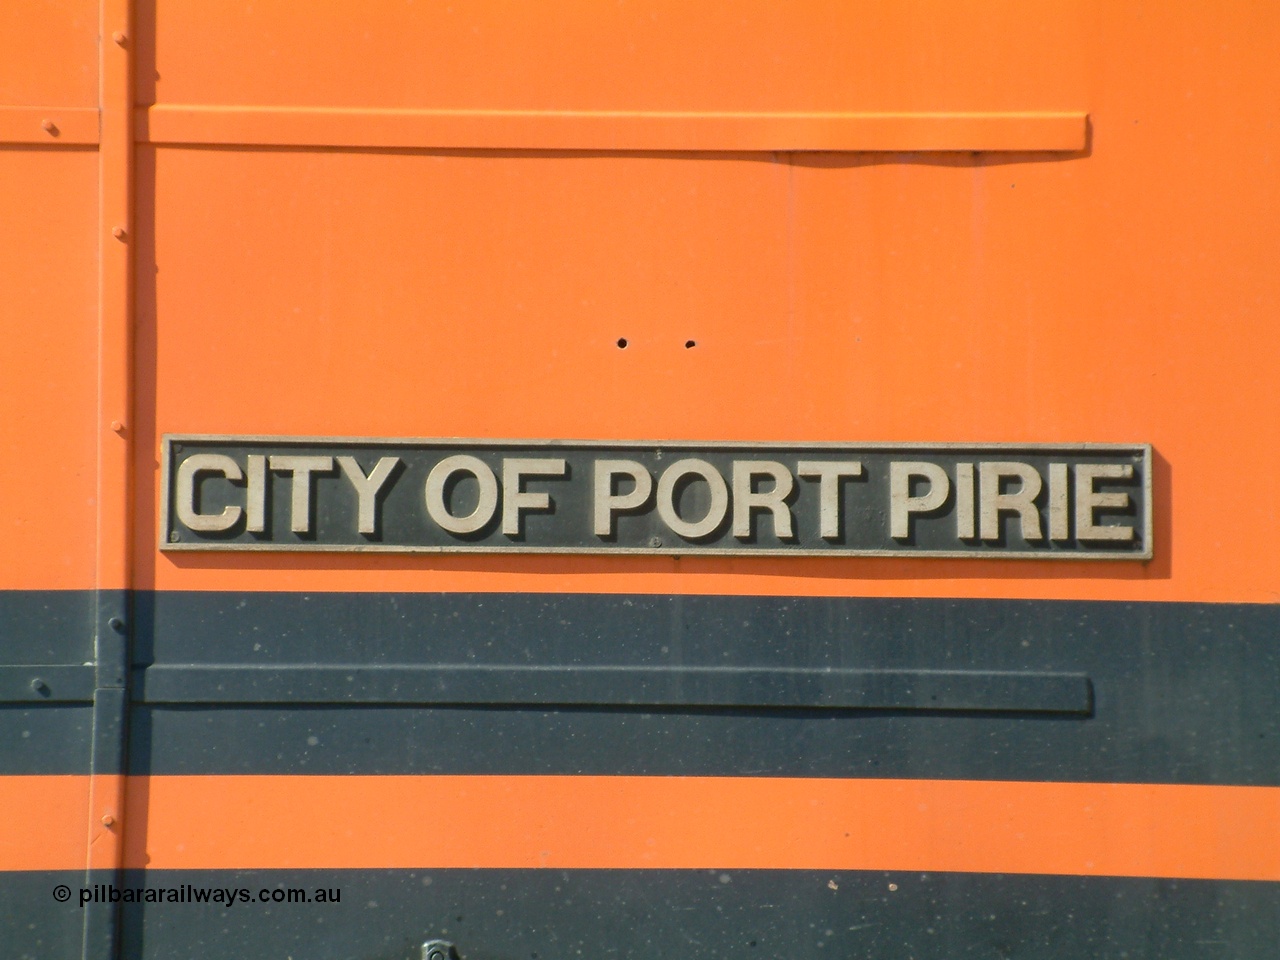 030404 141628
Port Augusta Spencer Junction yard, City of Port Pirie name plate on the side of ALF 18.
Keywords: ALF-class;ALF18;MKA;EMD;JT26C-2M;94-AN-018;rebuild;AL-class;AL21;Clyde-Engineering;EMD;JT26C;76-837;